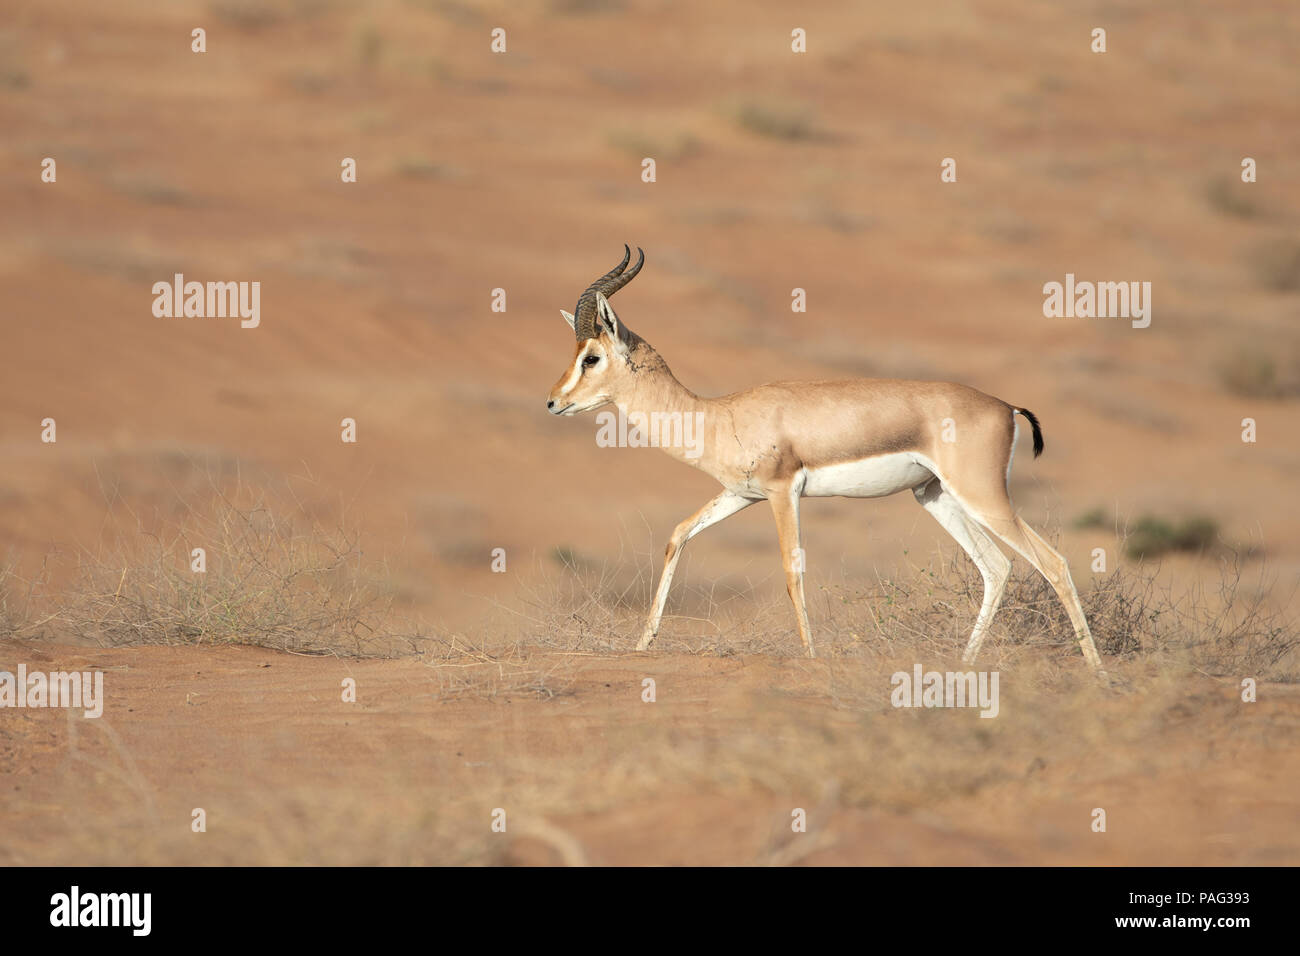 Single mountain gazelle running in the desert. Dubai, UAE. Stock Photo